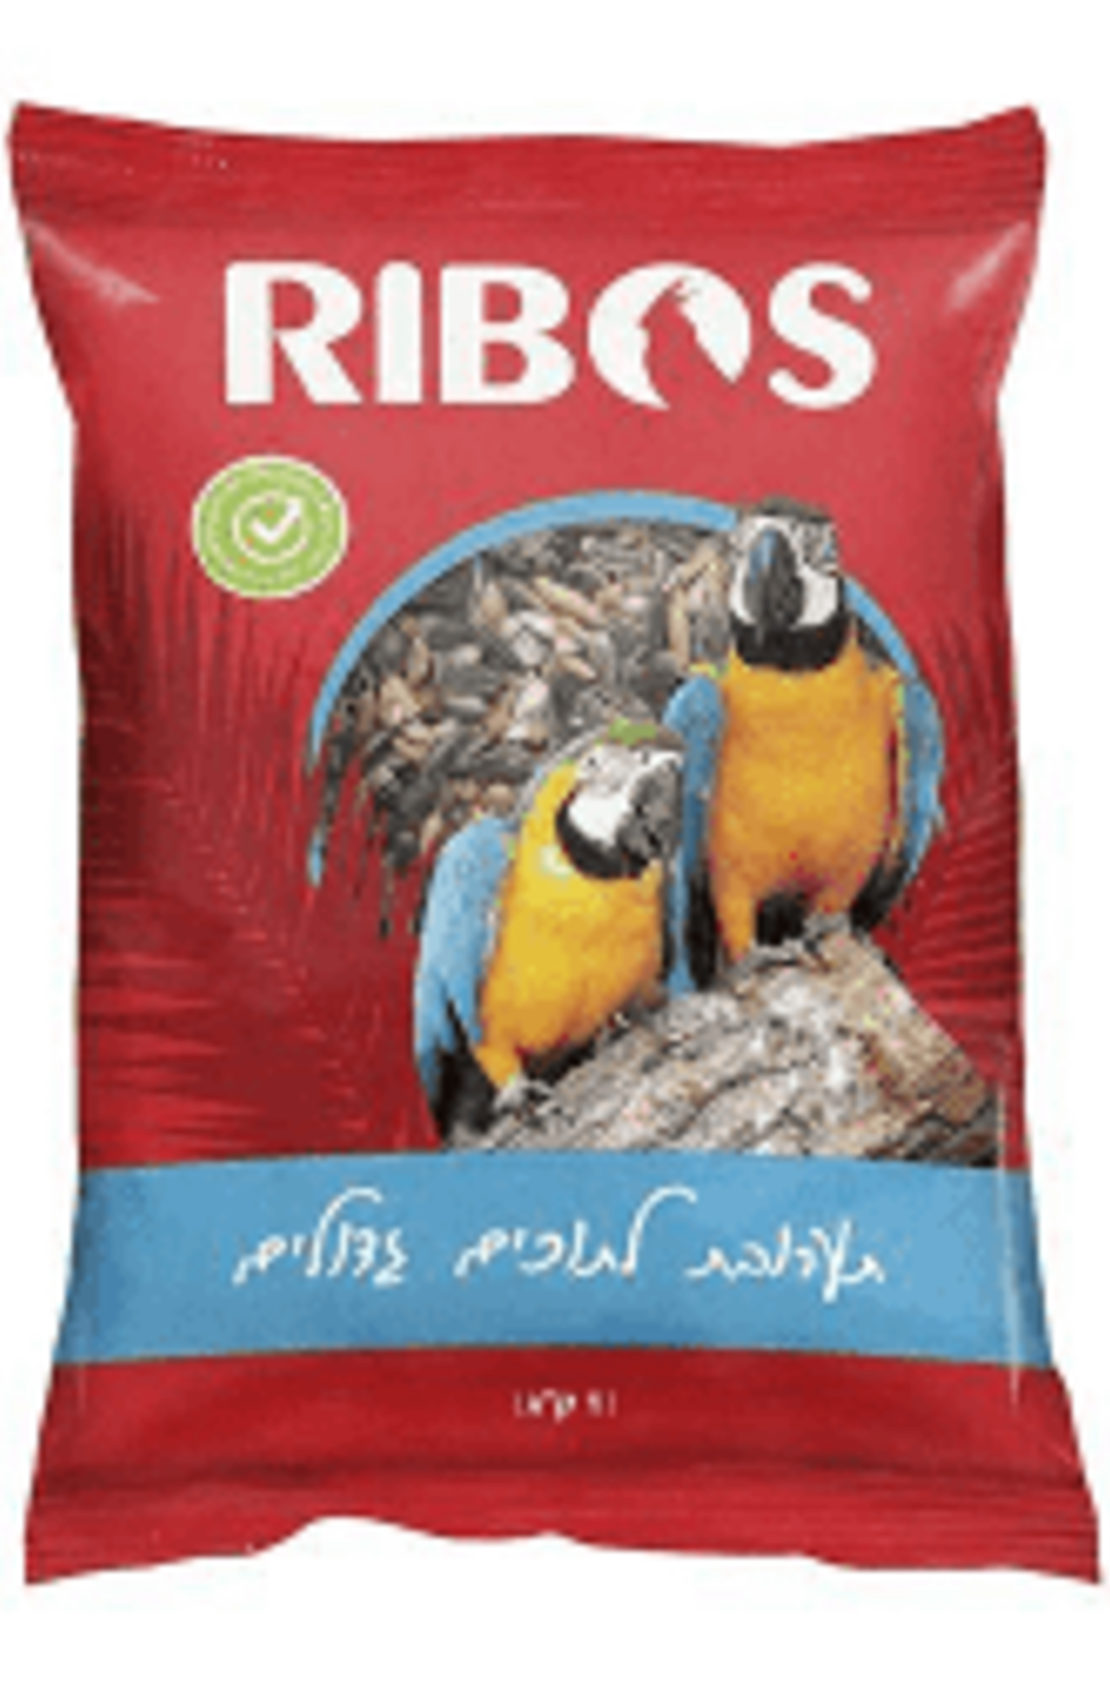 Ribos ריבוס - תערובת מזון לתוכים גדולים